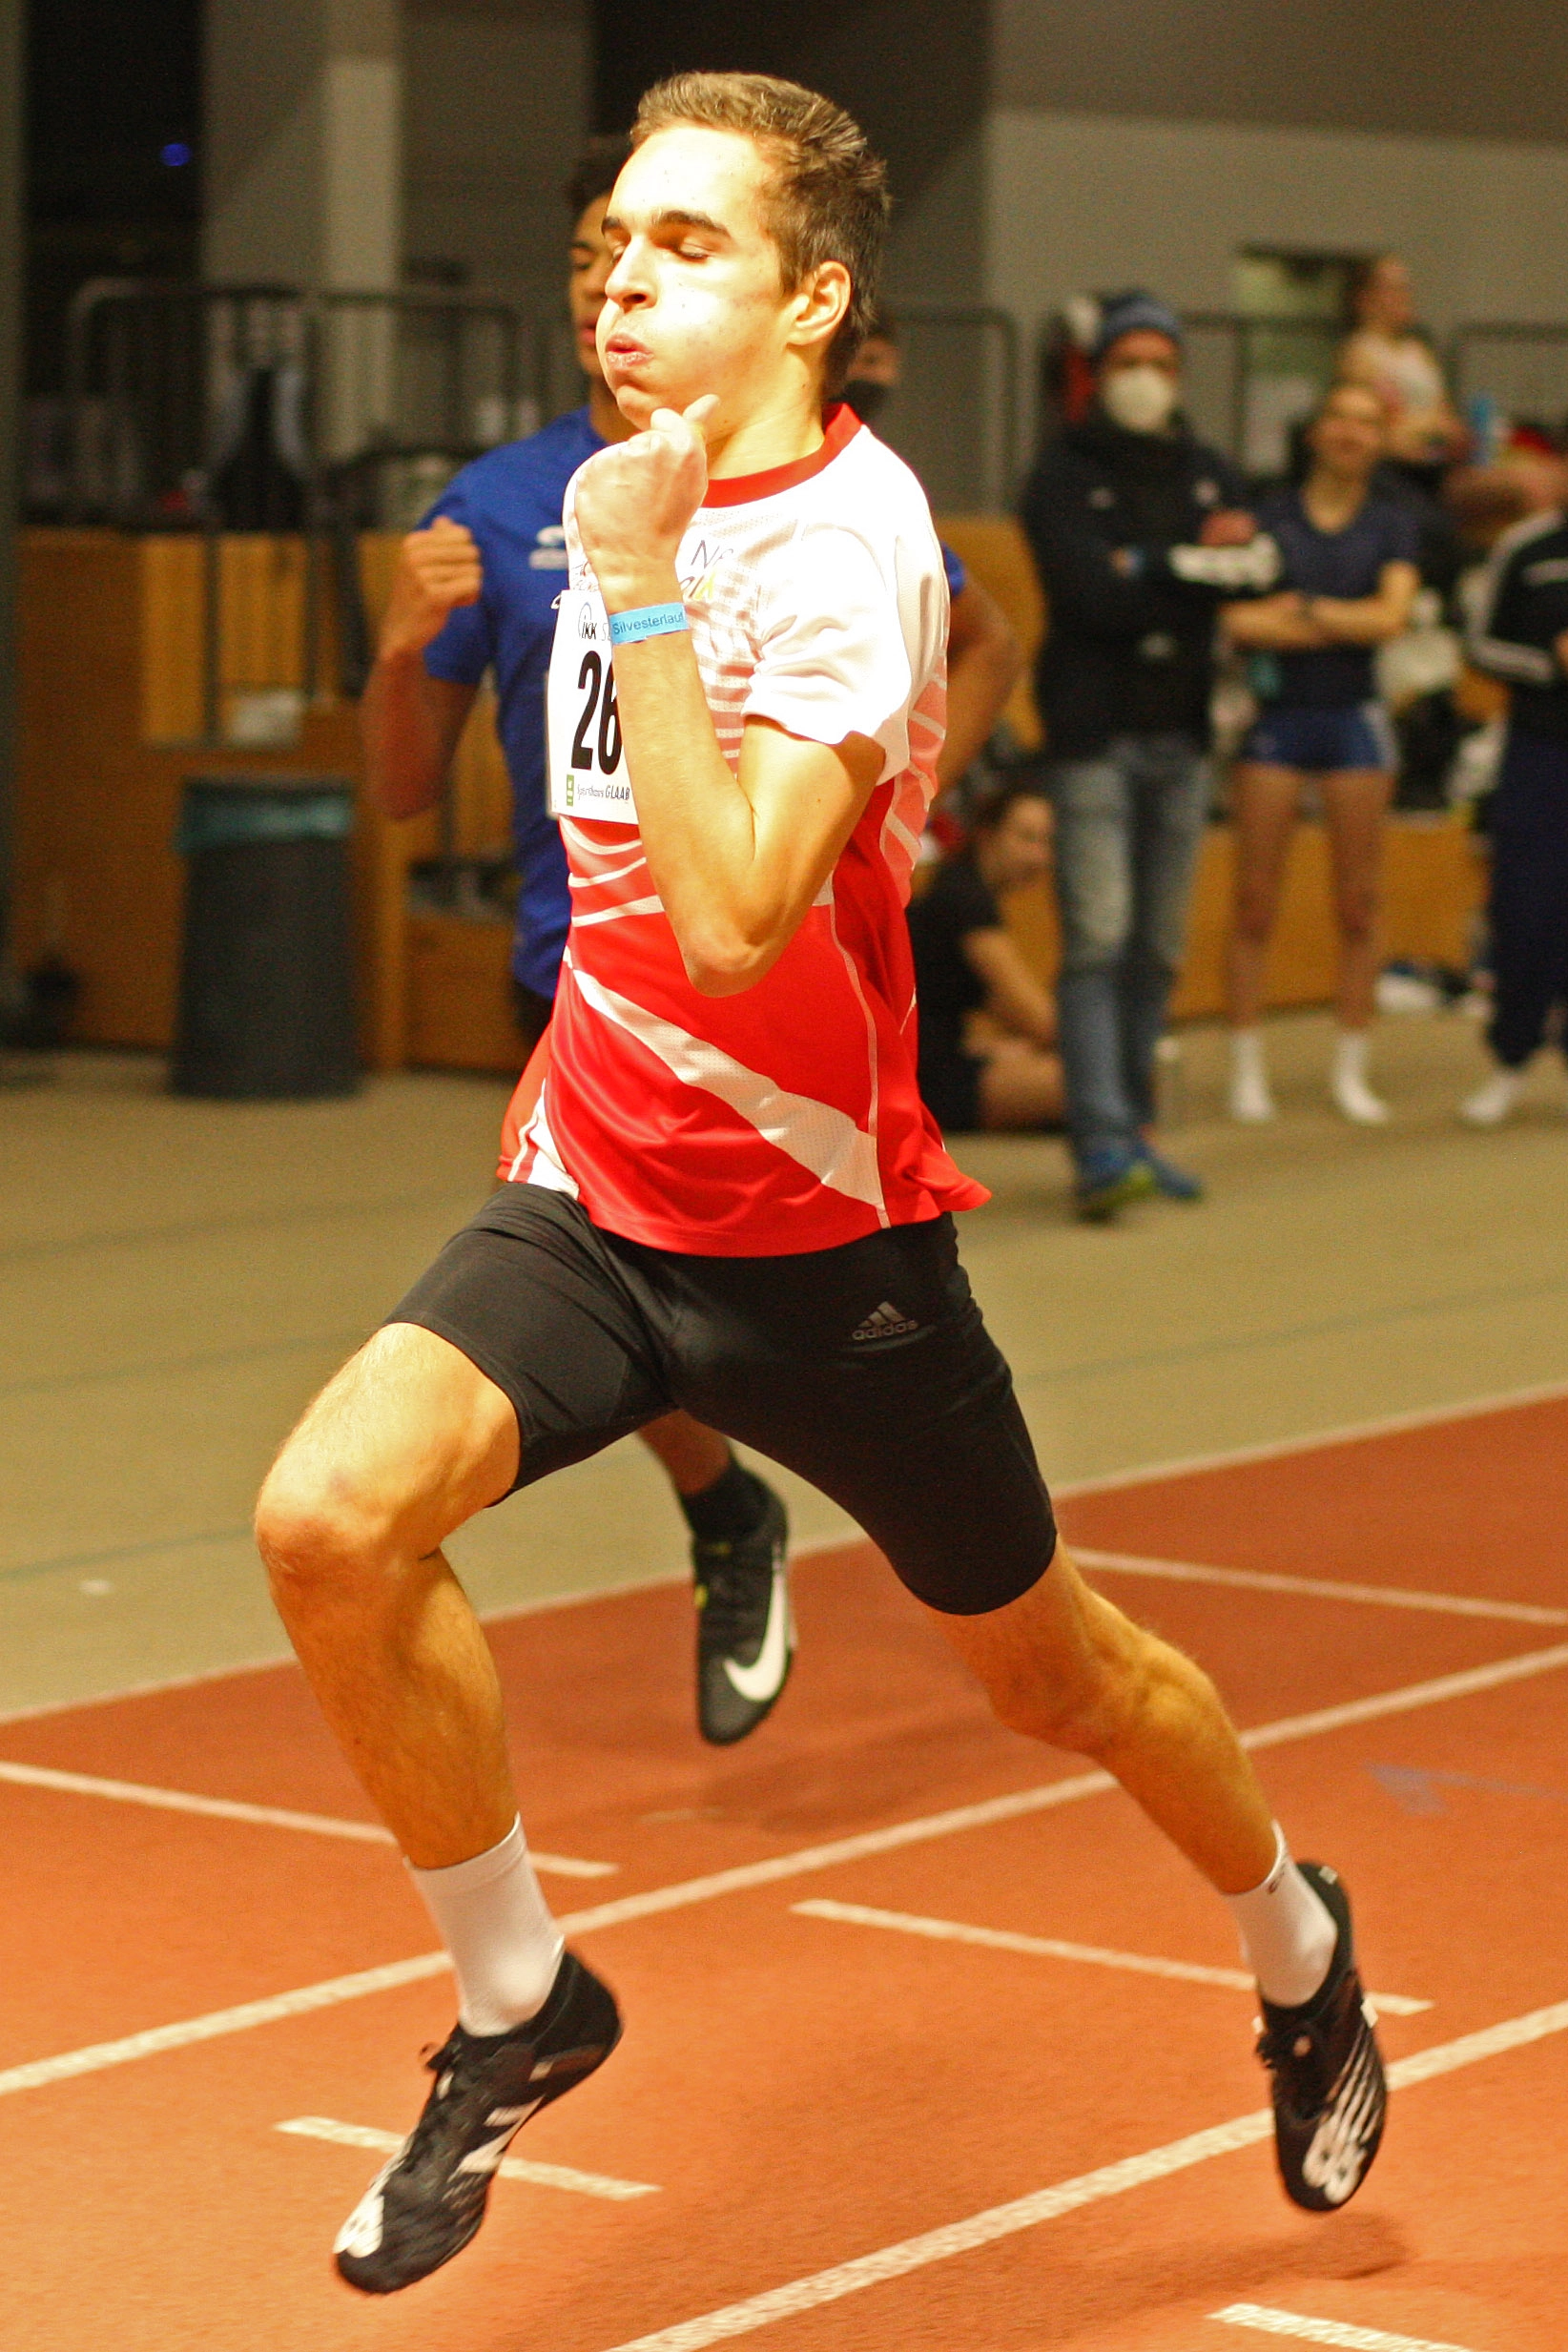 David Berson 200m